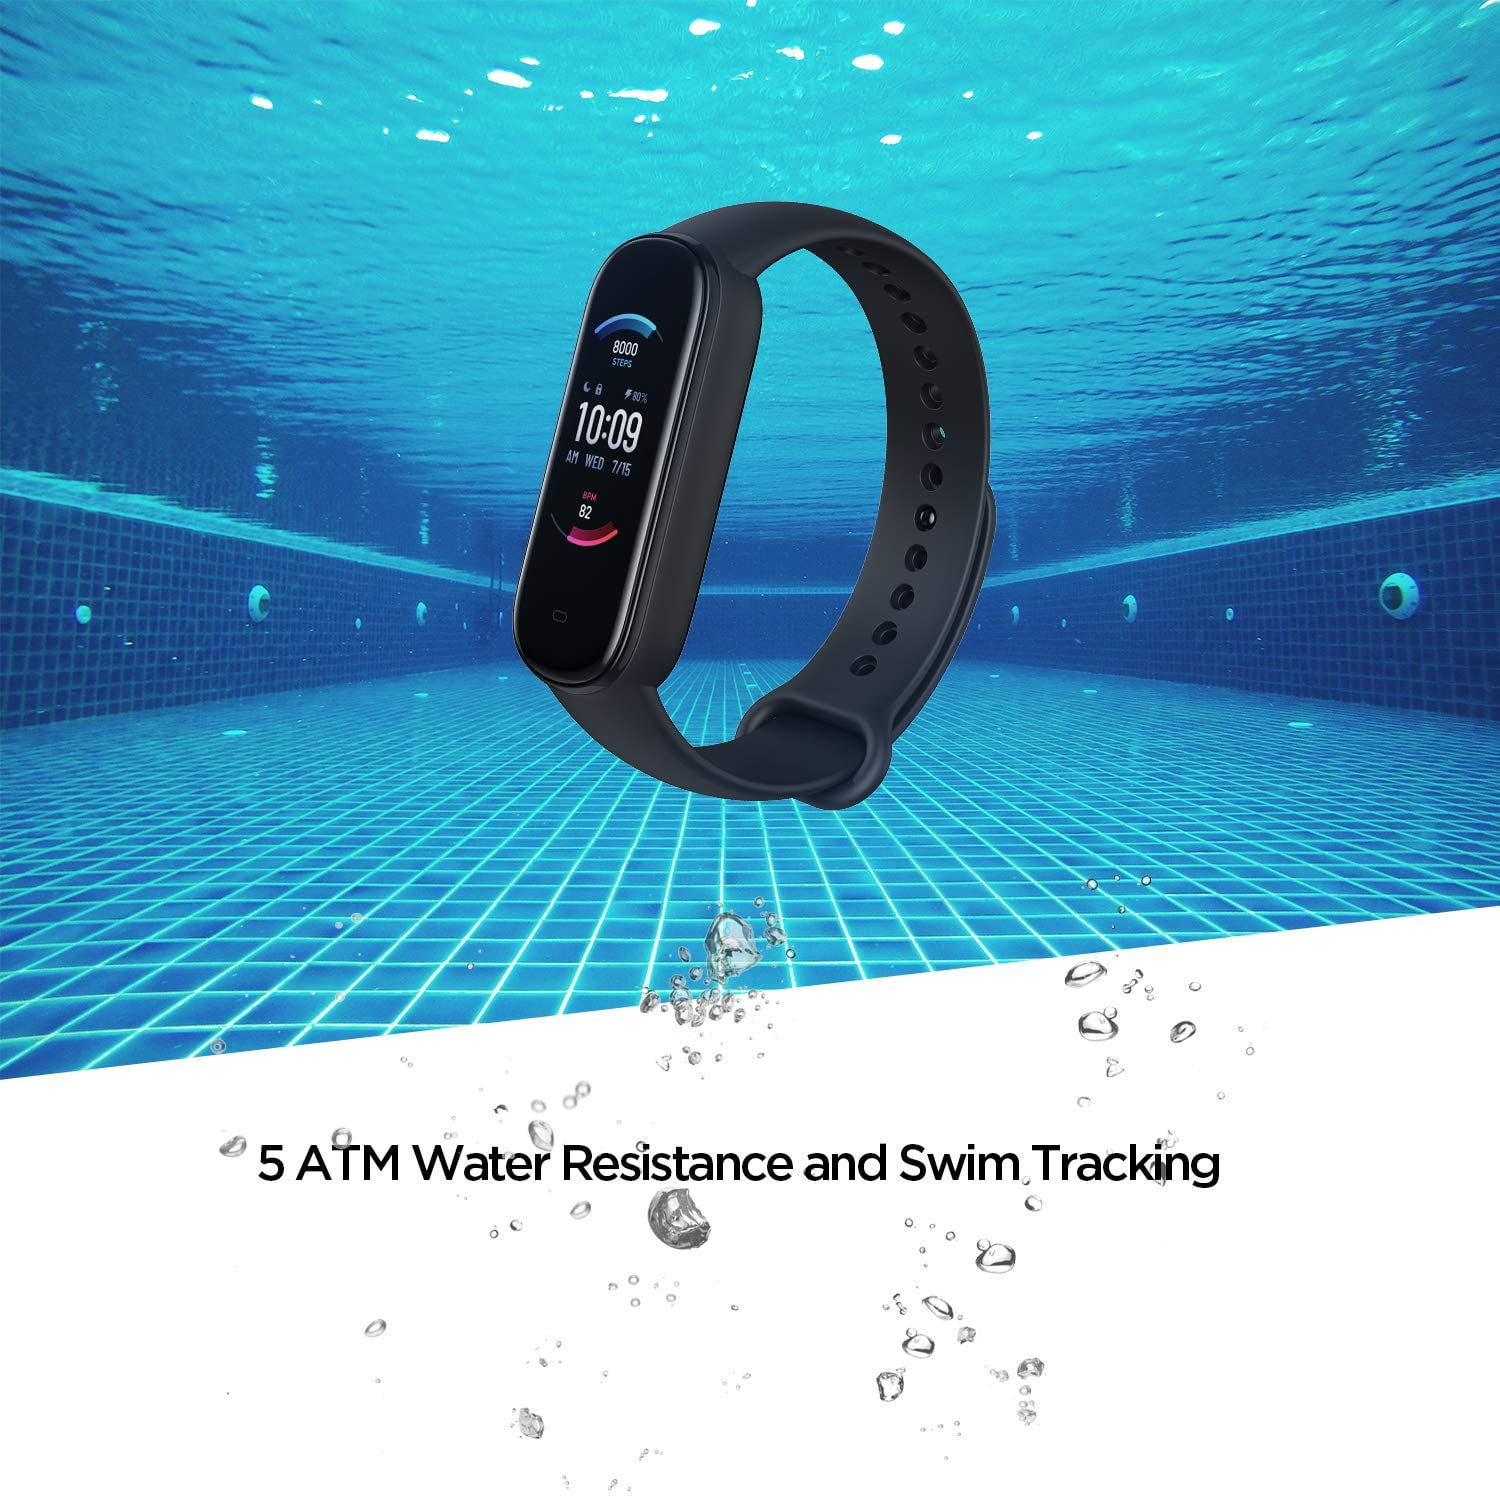 Amazfit Band 5: 15-Day Battery Life Fitness Tracker - Black Silicone 